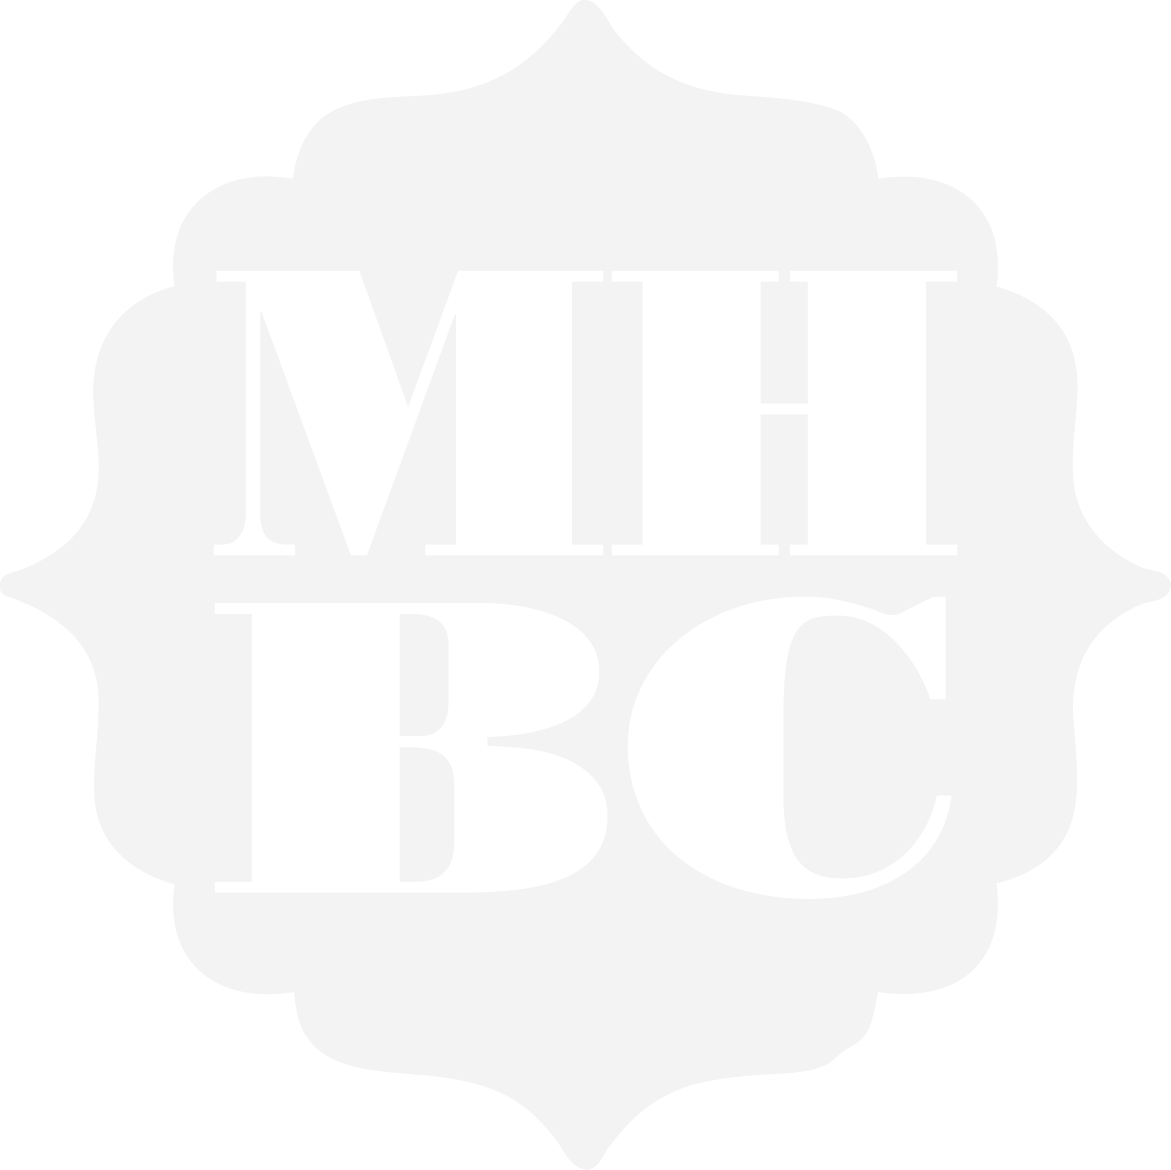 MHBC abbreviation for Mill House Brewing Company